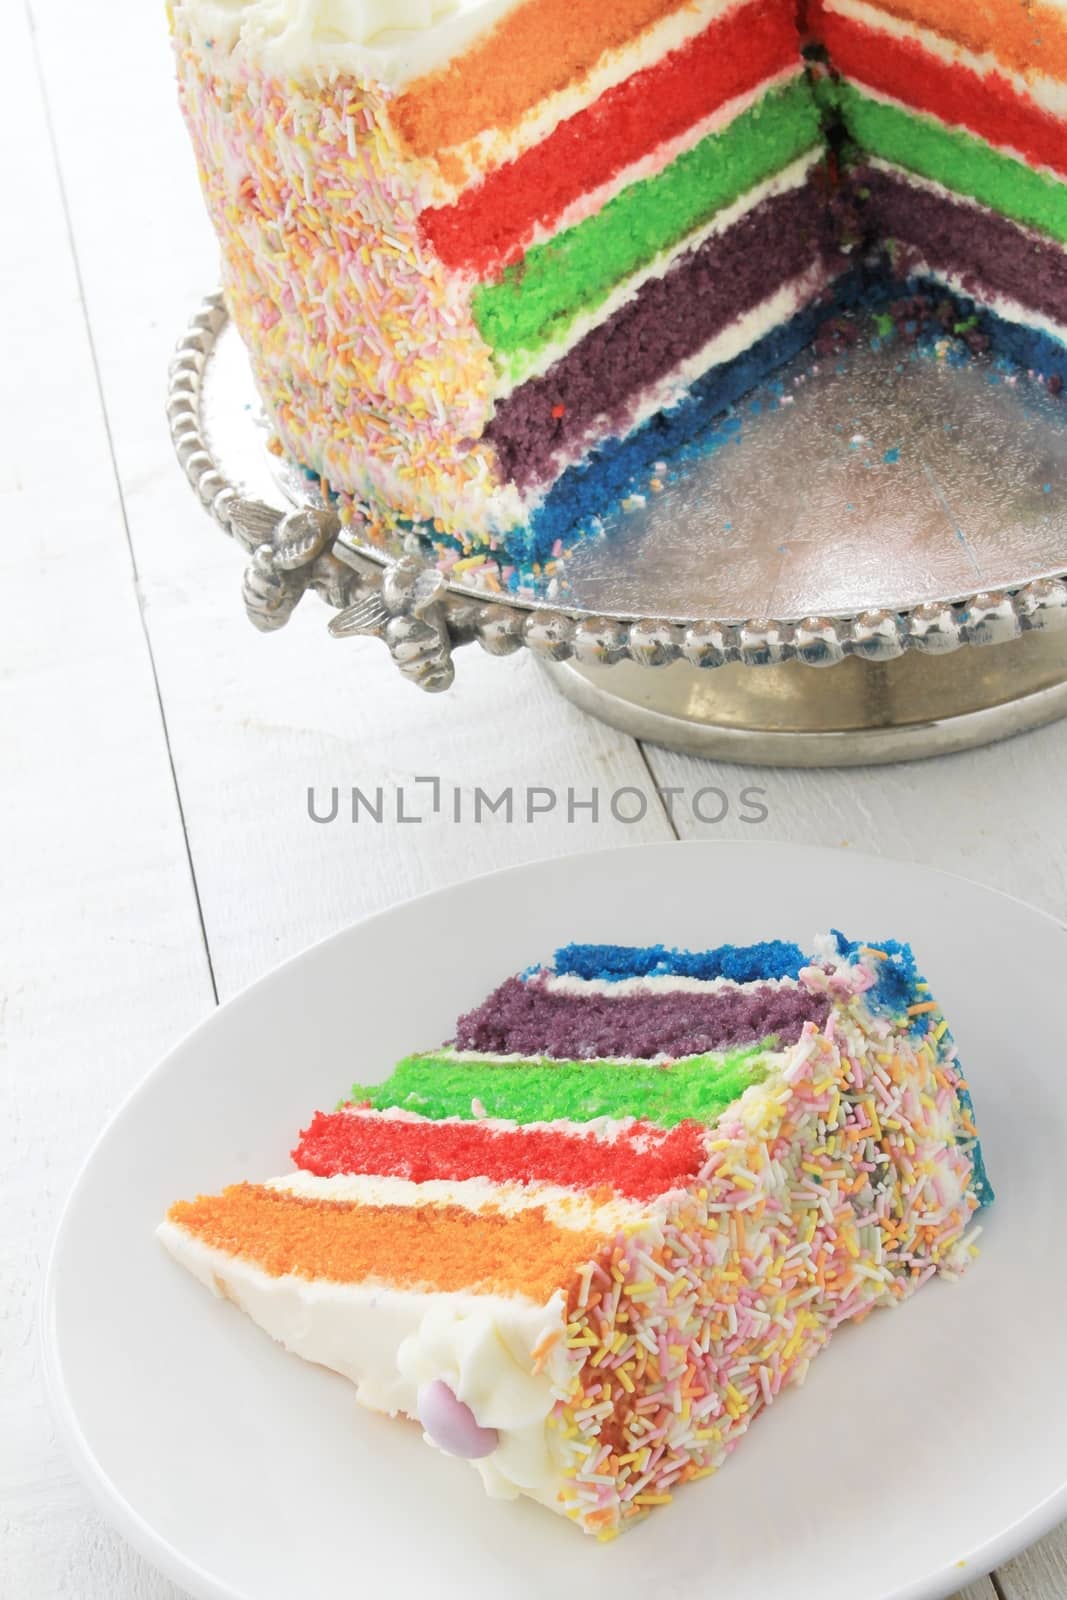 layered rainbow cake by neil_langan